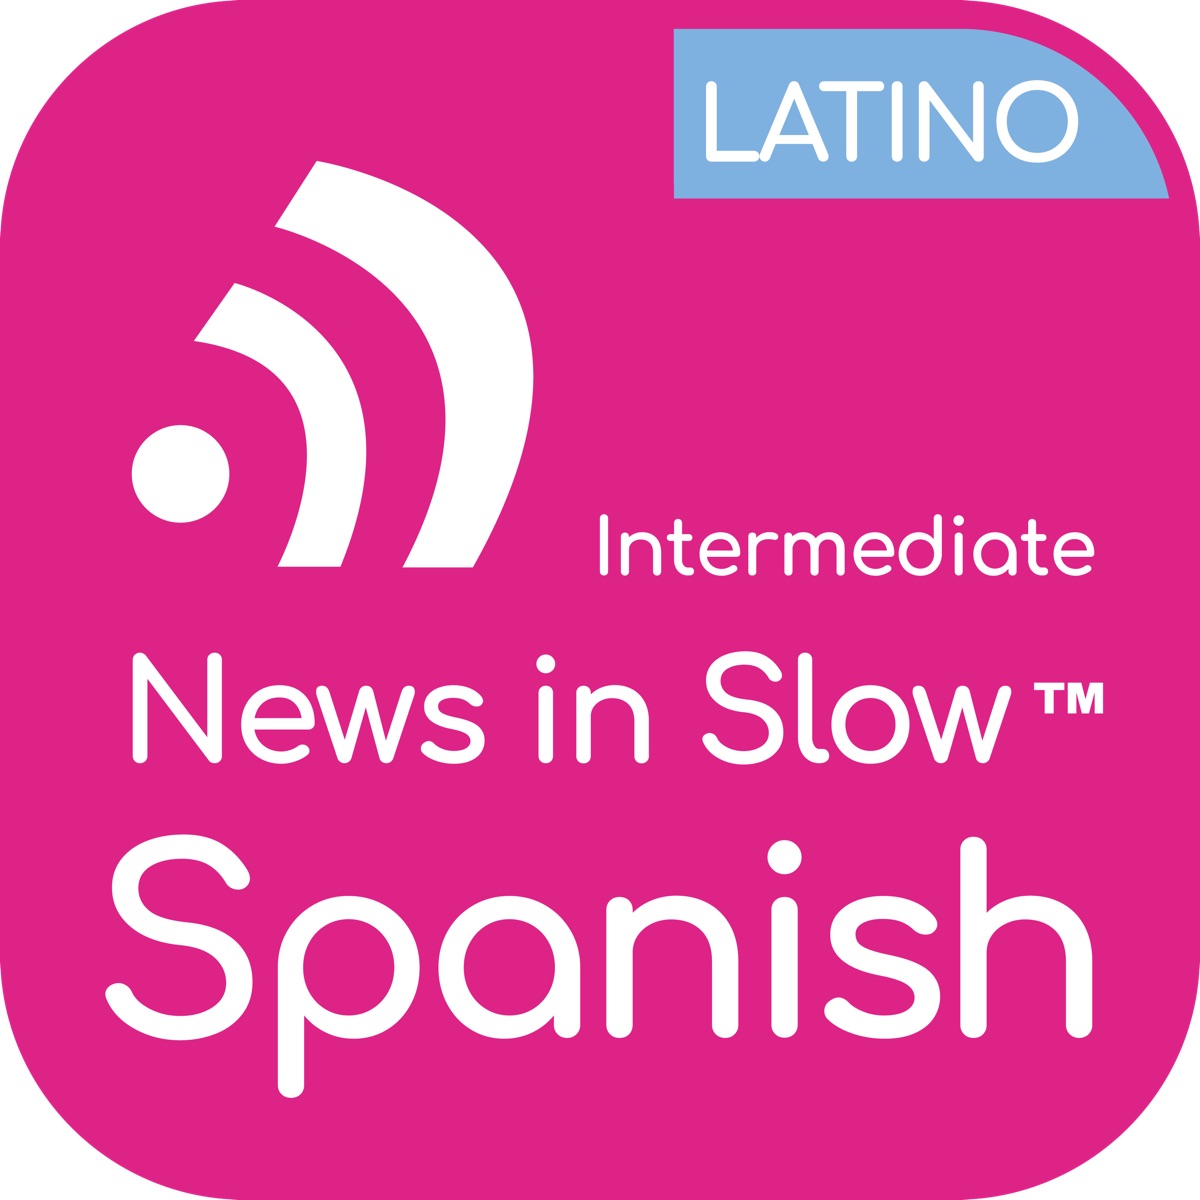 News in Slow Spanish Latino (Intermediate) – UK Podcasts